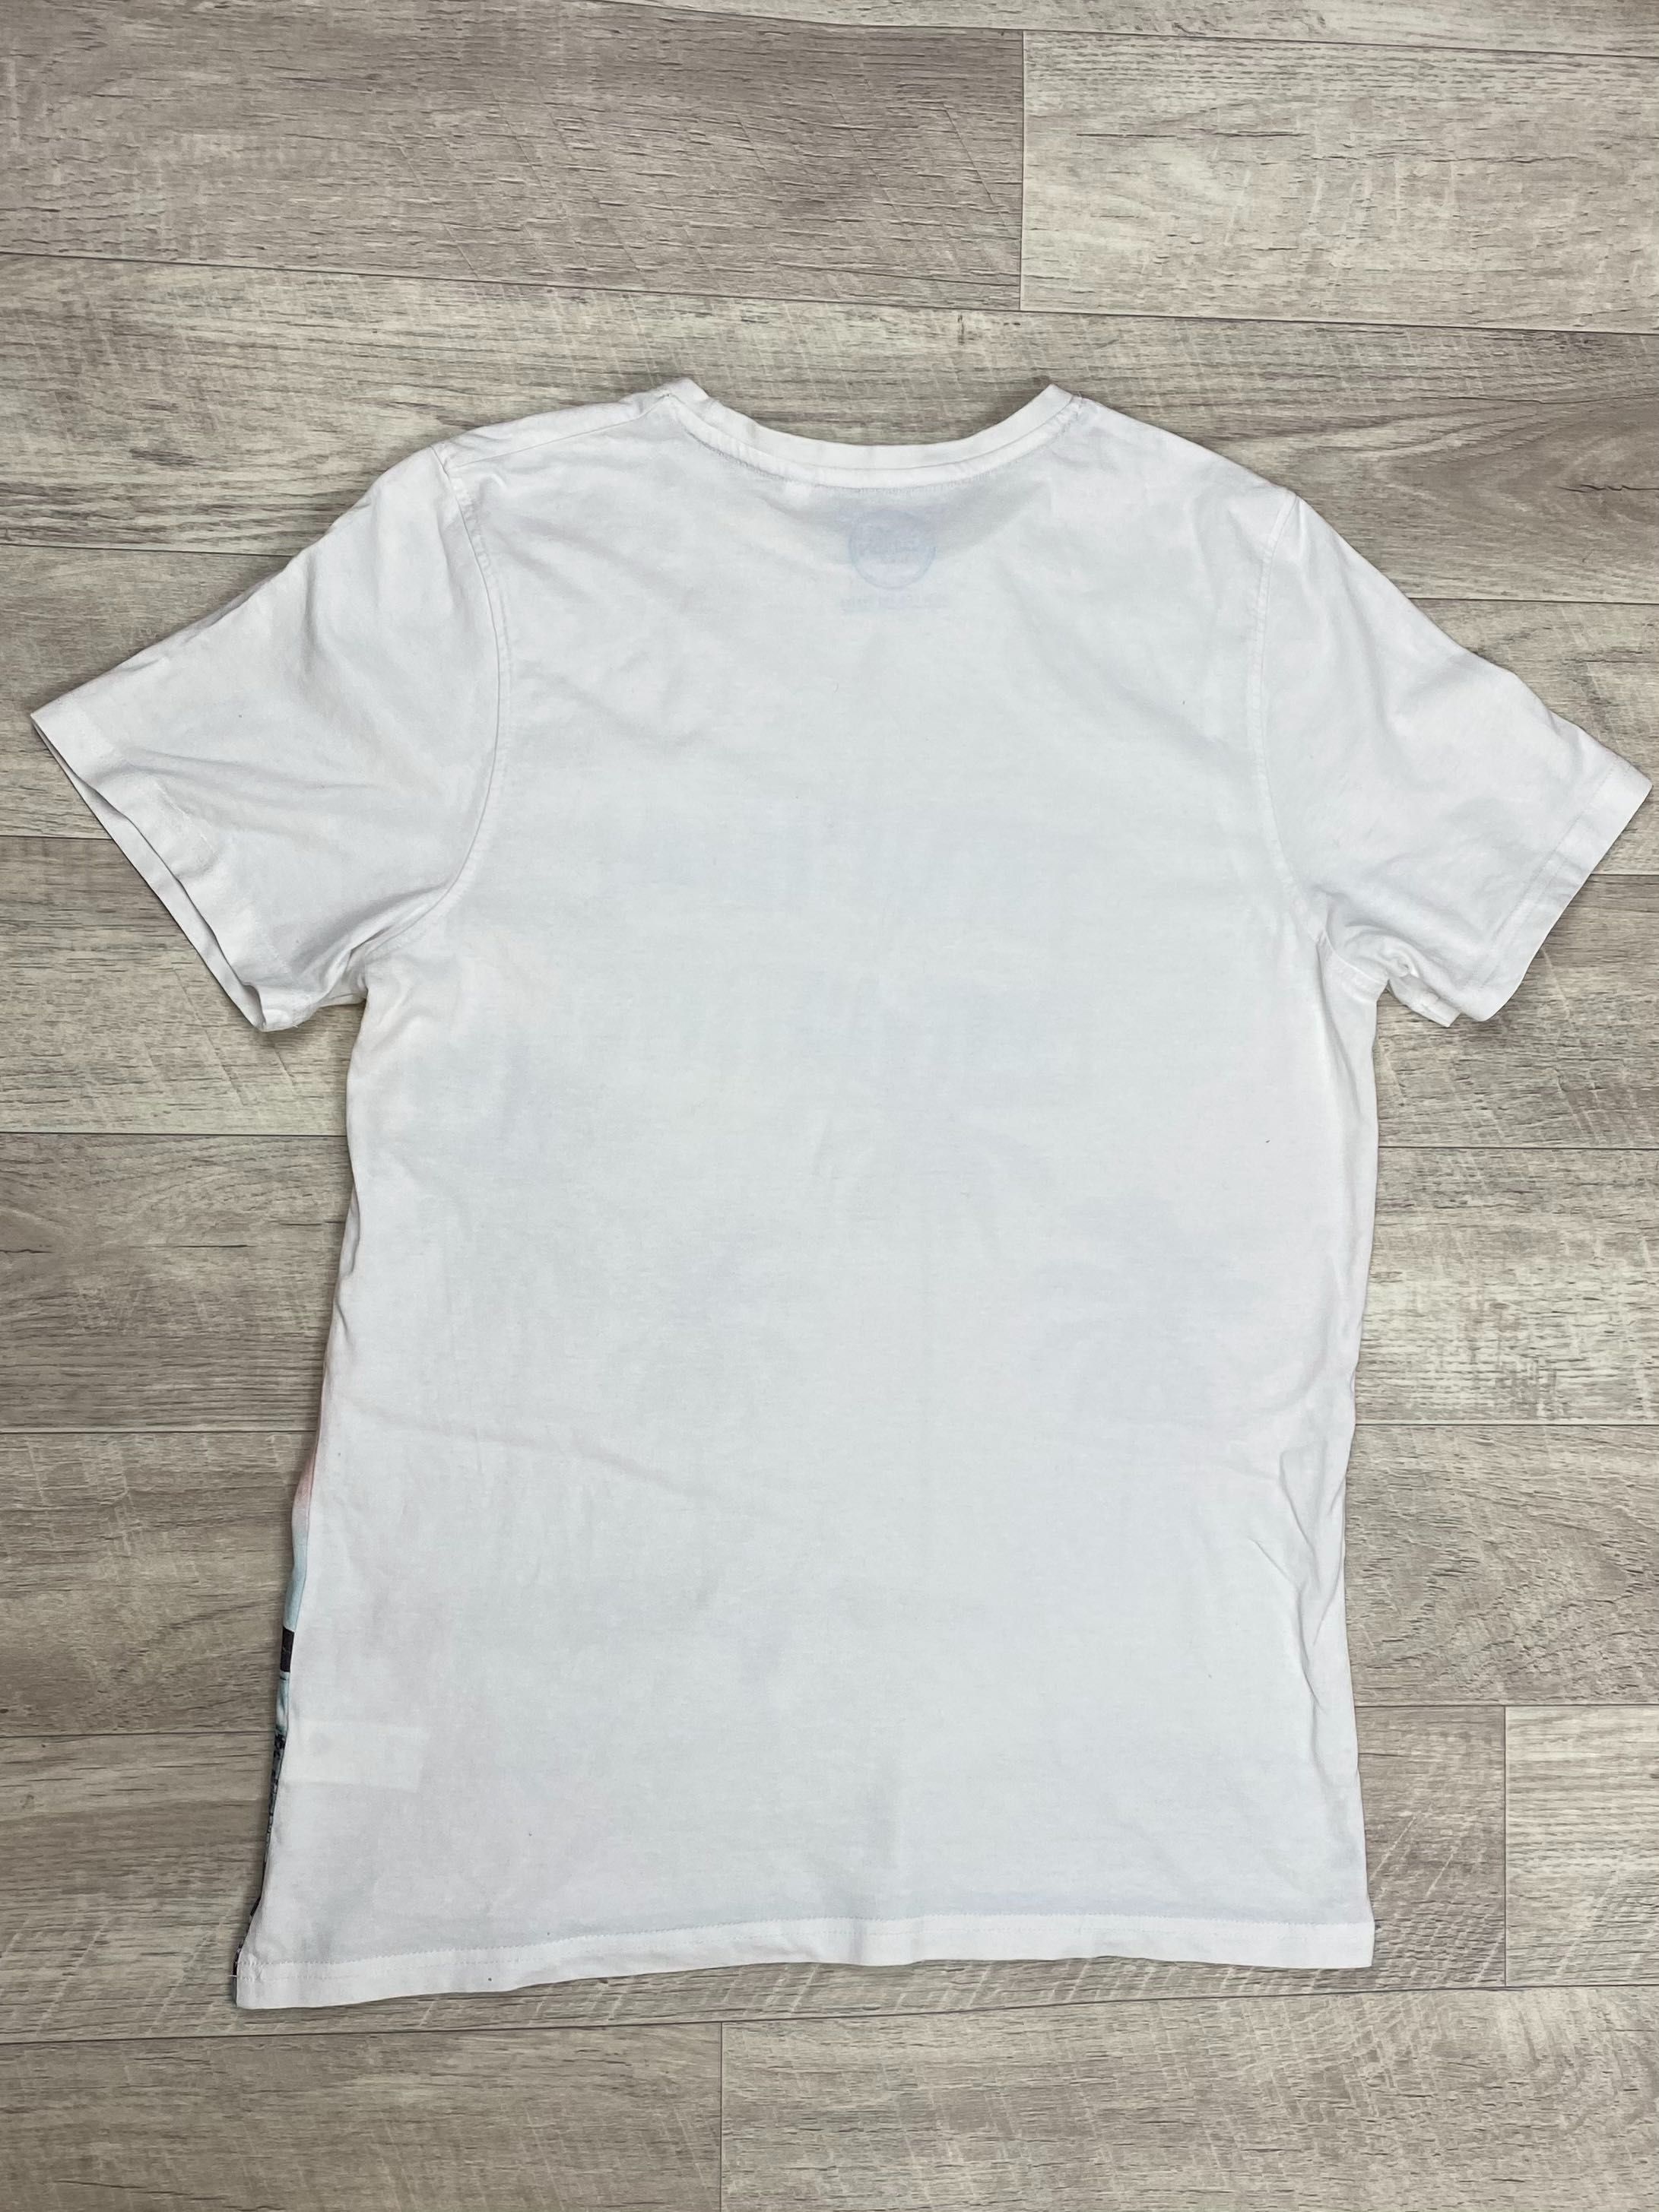 Skate Nation USA футболка 170/176 см M размер белая с принтом оригинал